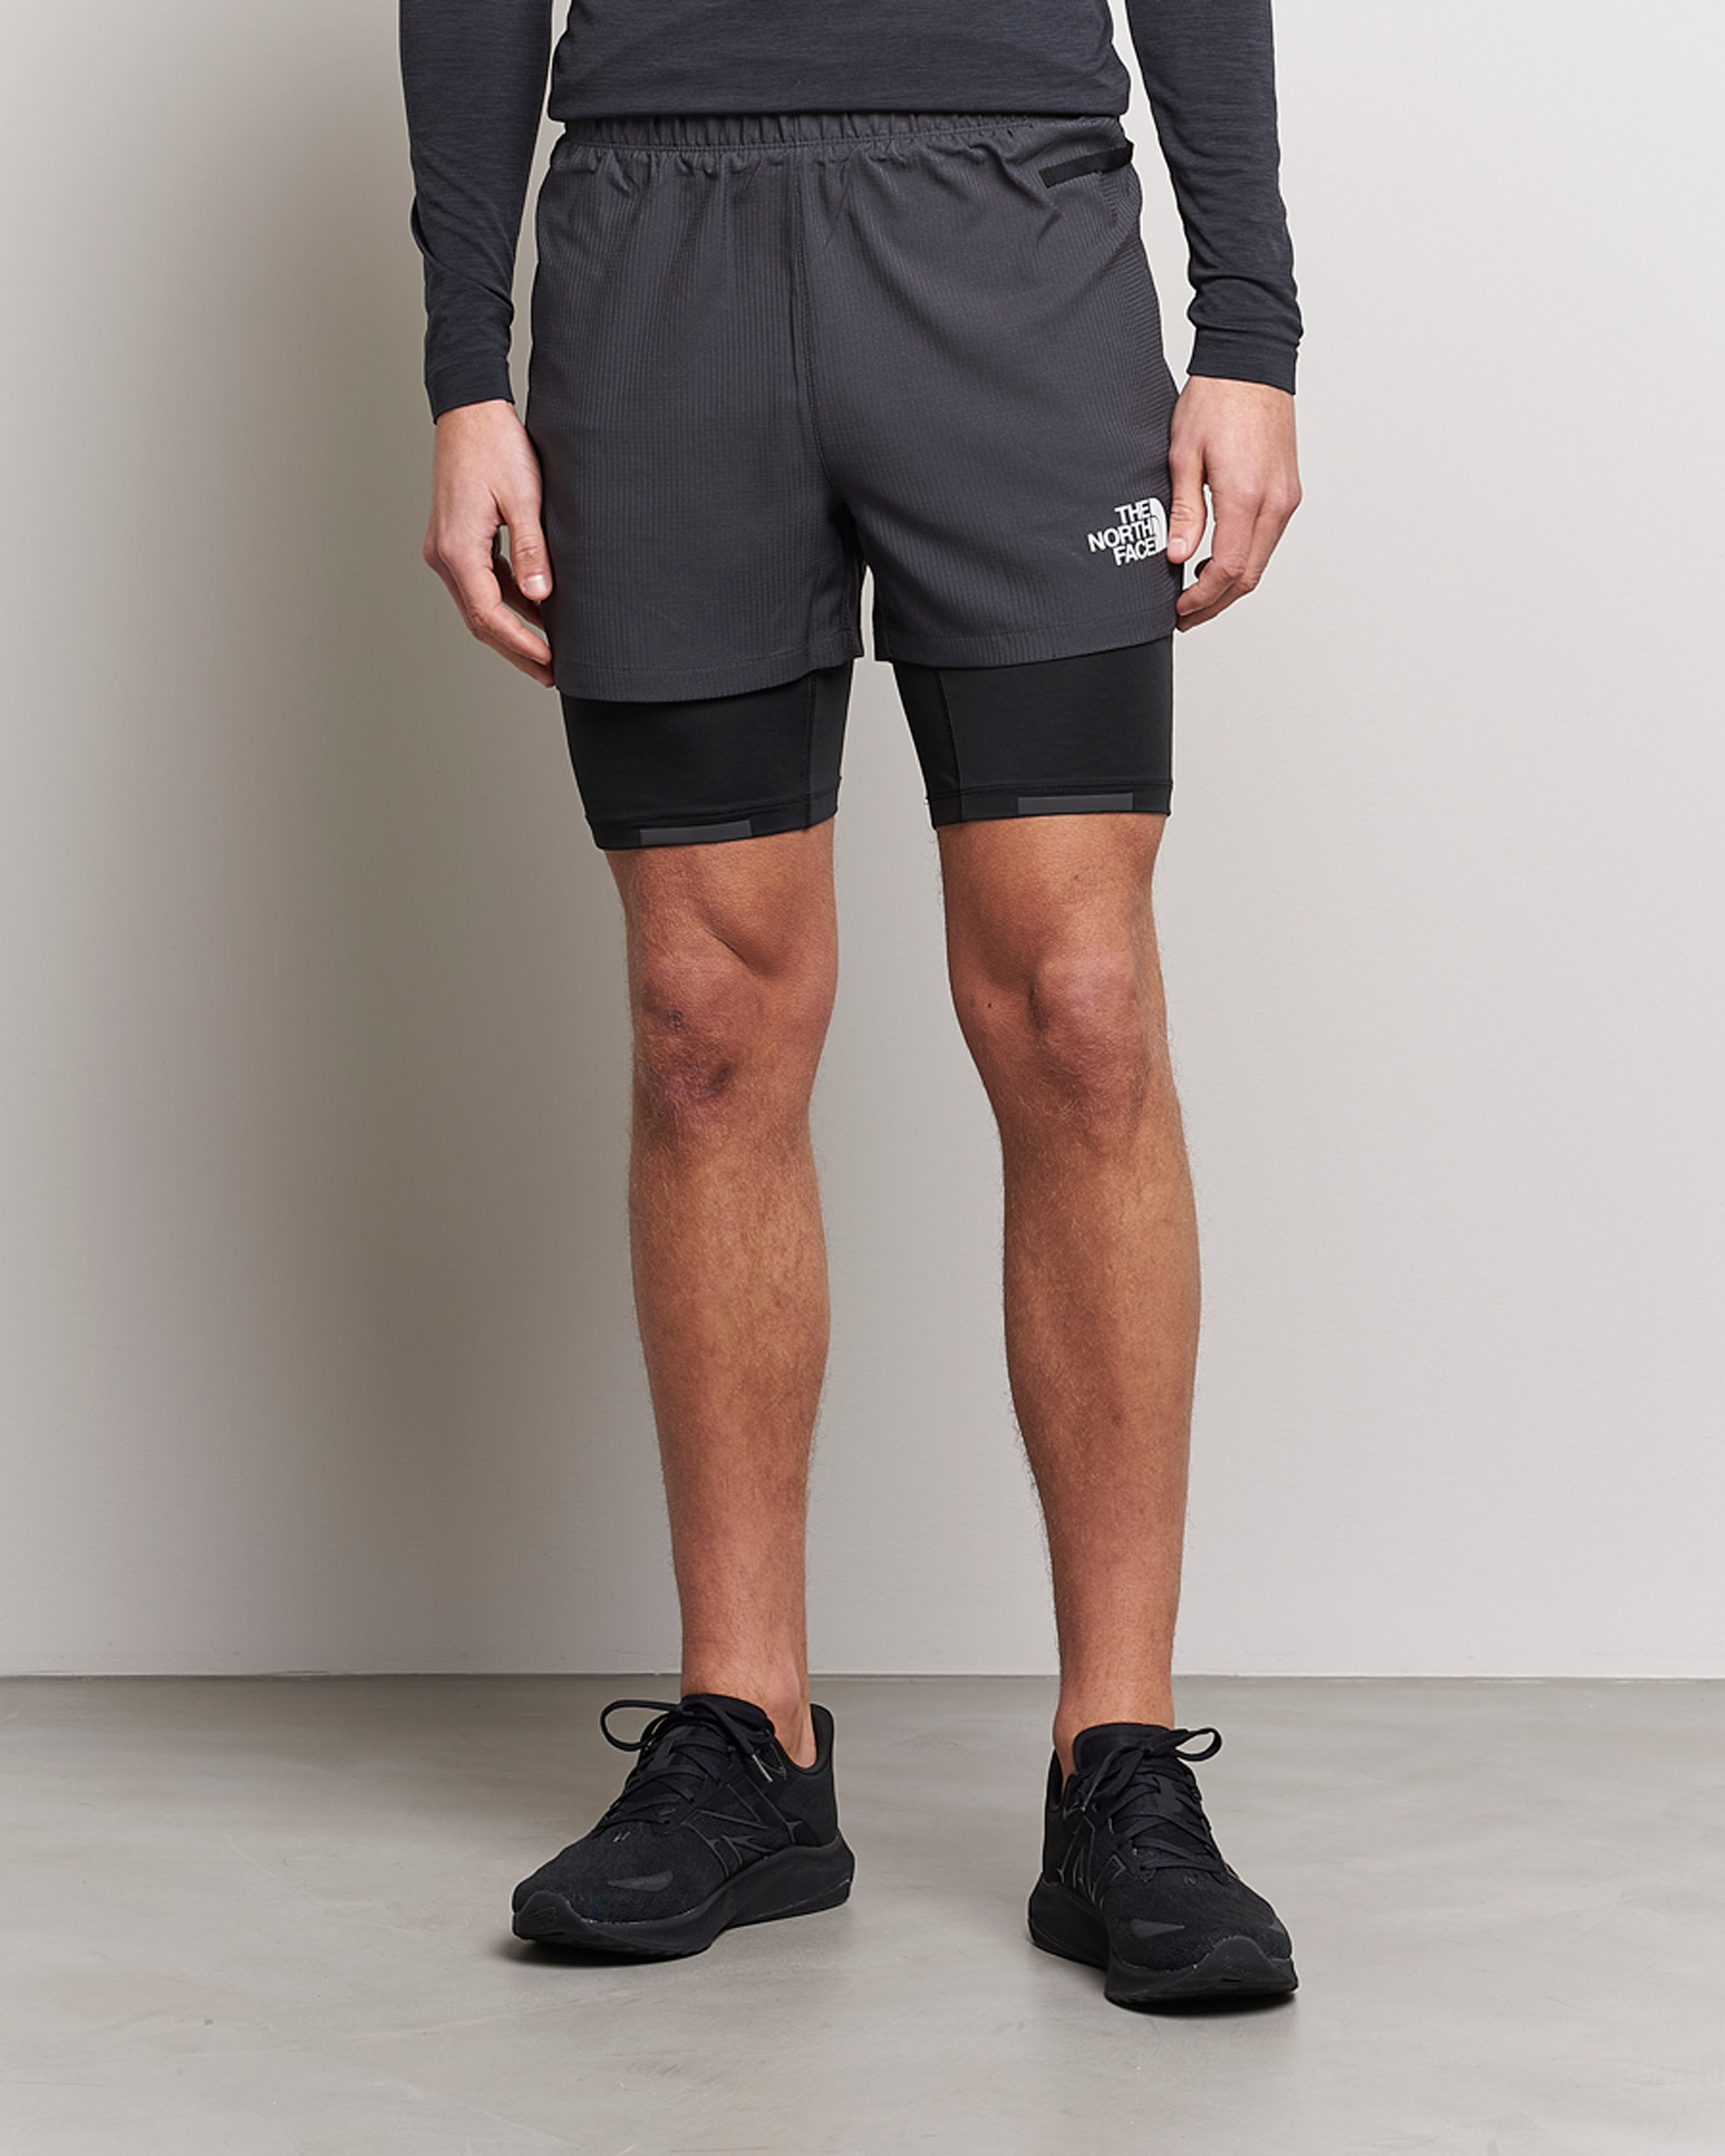 Men | Functional shorts | The North Face | Mountain Athletics Dual Shorts Black/Asphalt